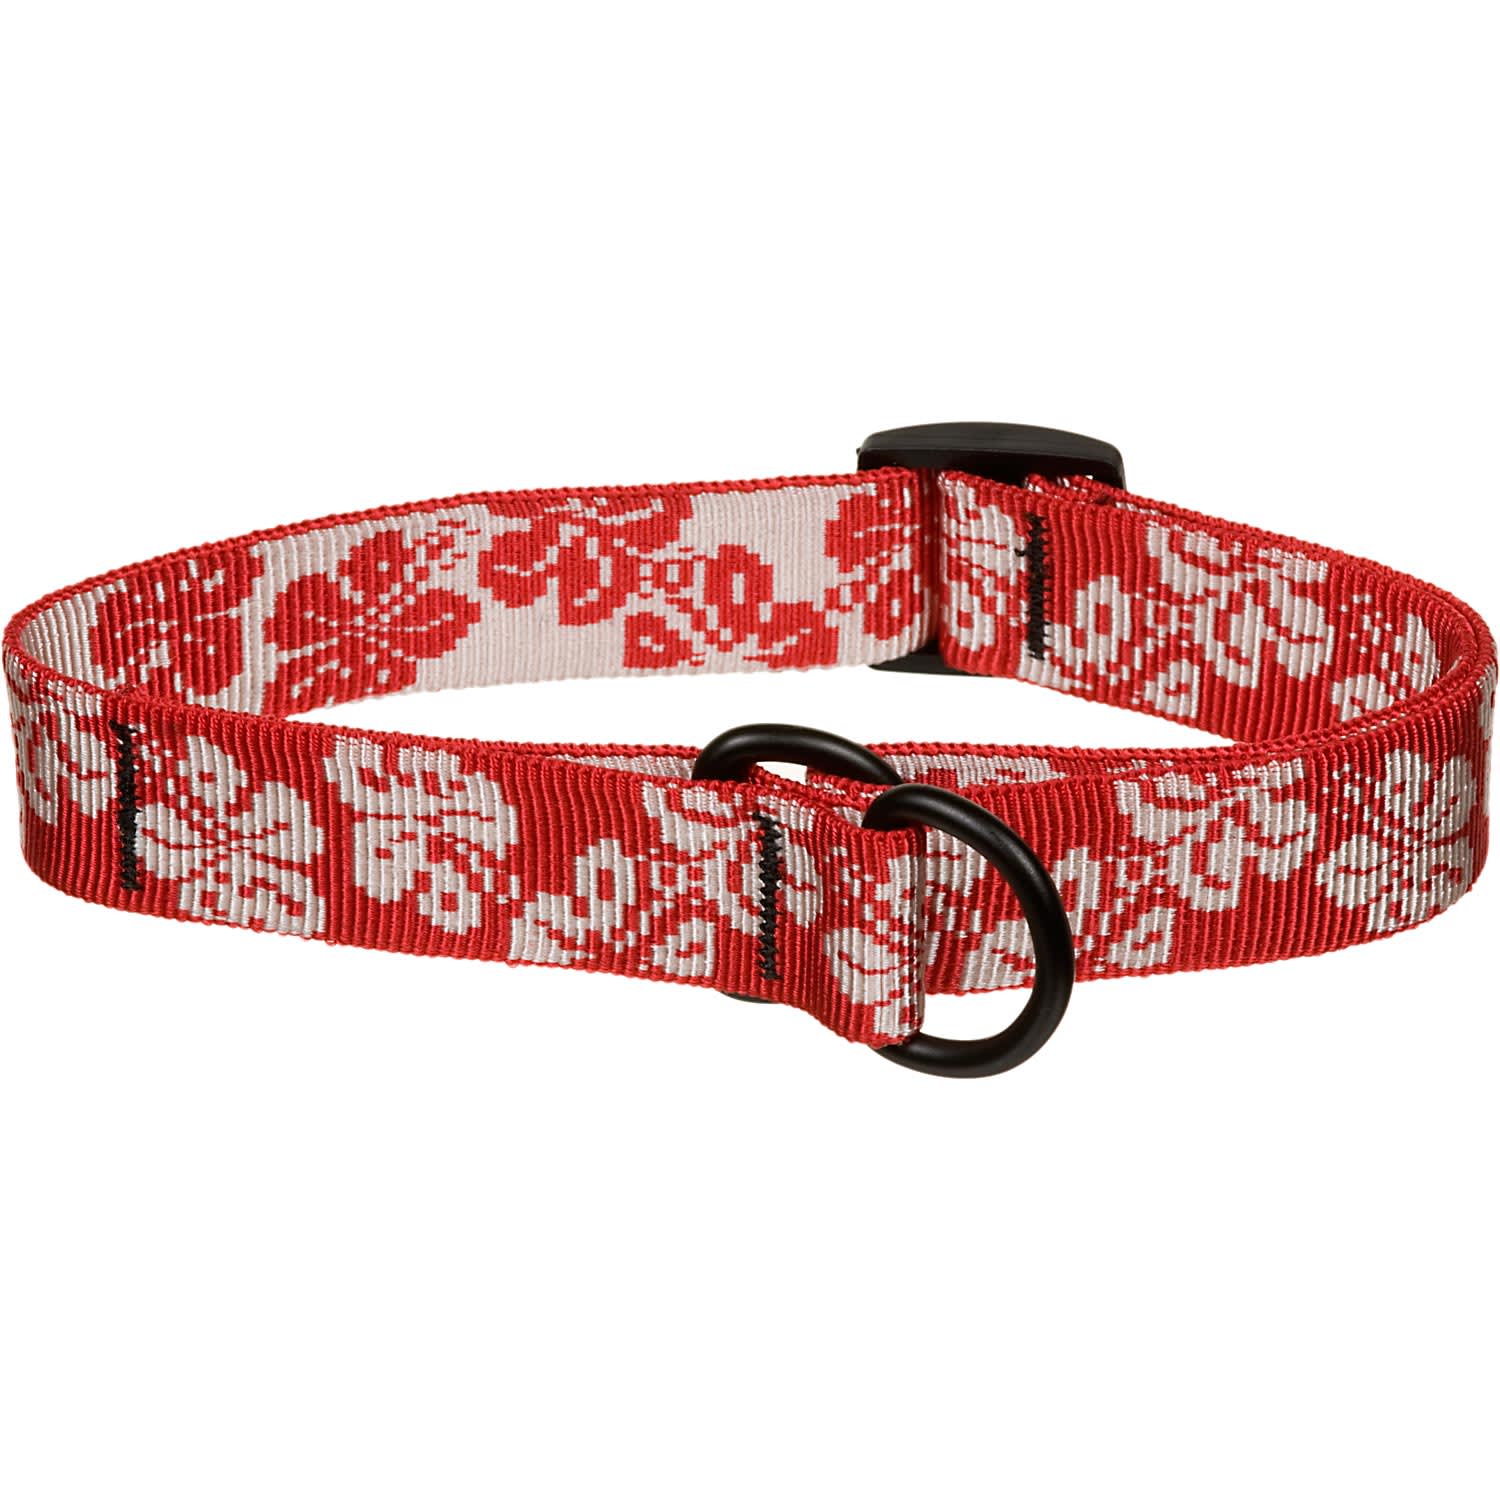 Soft Nylon Training Slip Collar for Dogs Mycicy Reflective Dog Choke Collar 5/8 W x 14 L, Green